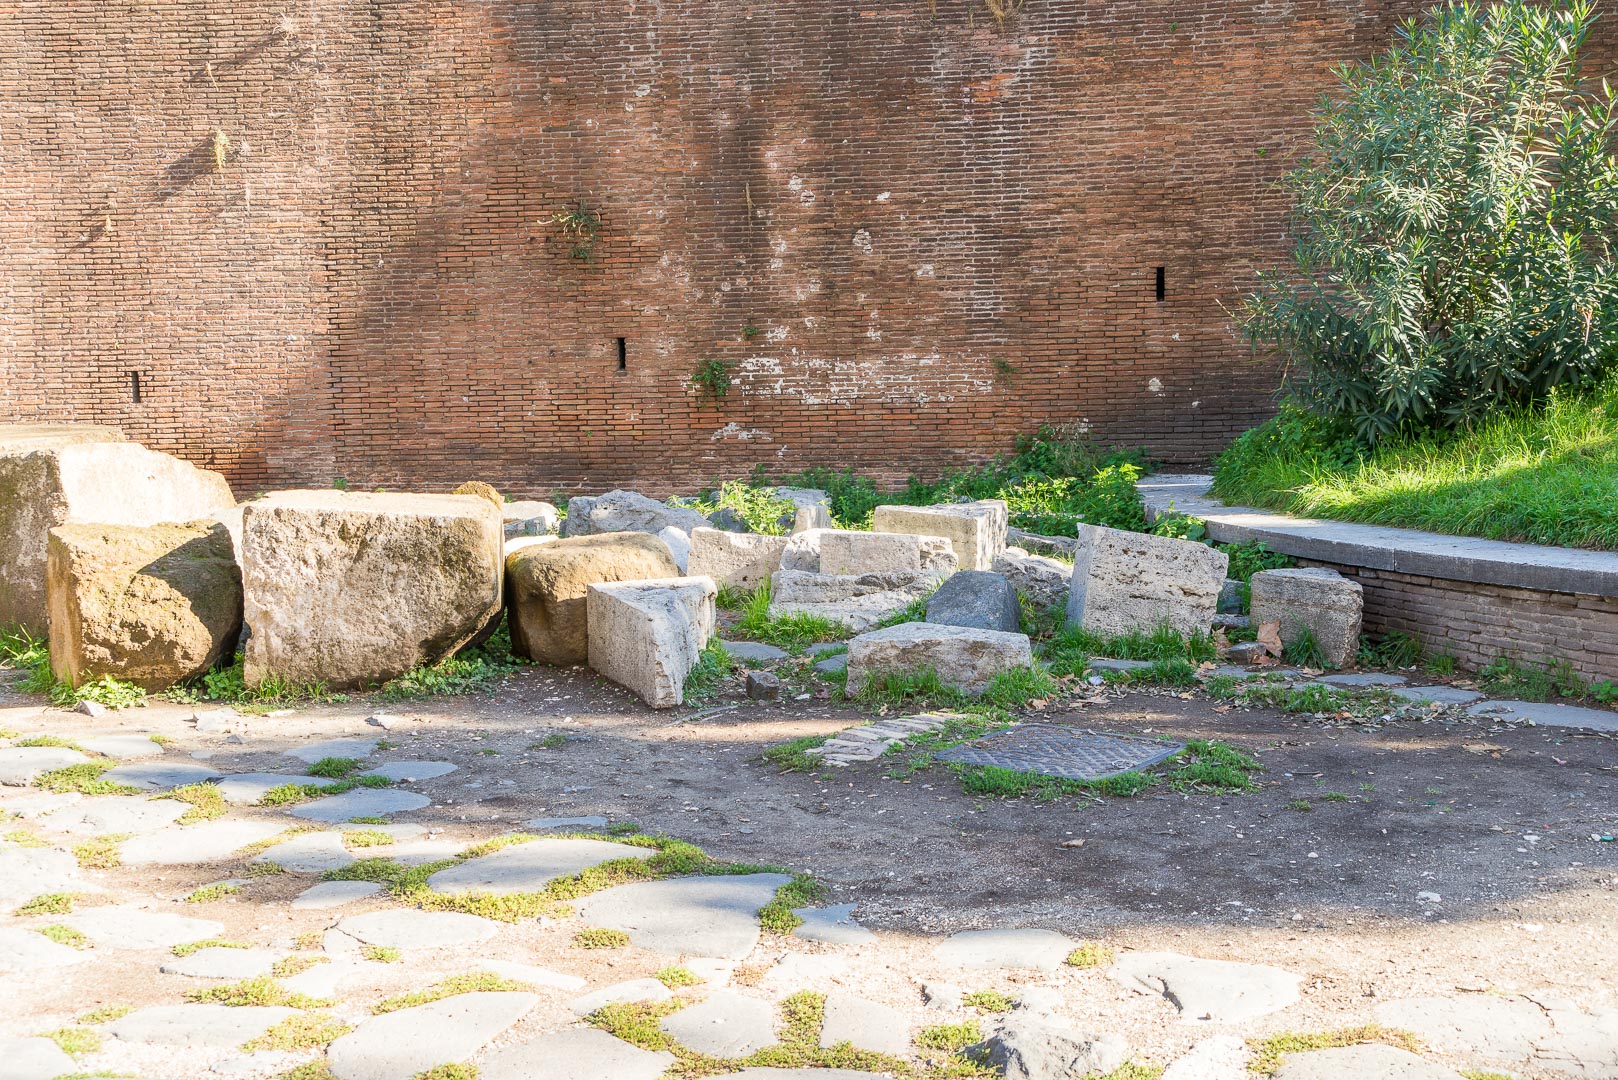 Backplate • ID: 12288 • HDRI Haven - Ruins Of Colosseum